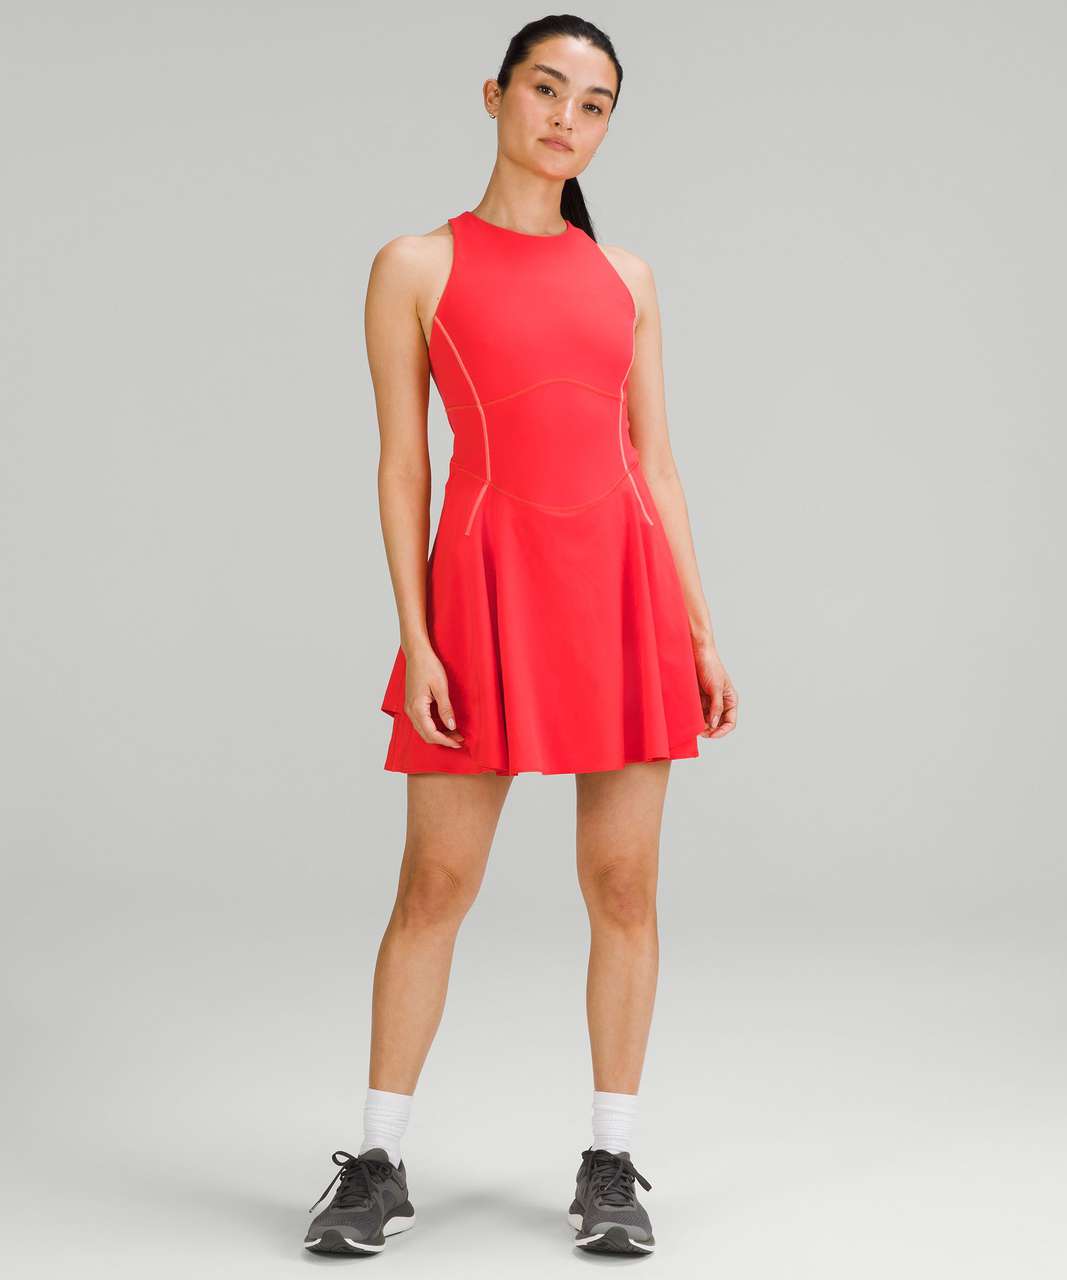 Lululemon Court Crush Tennis Dress - Carnation Red / Sunset